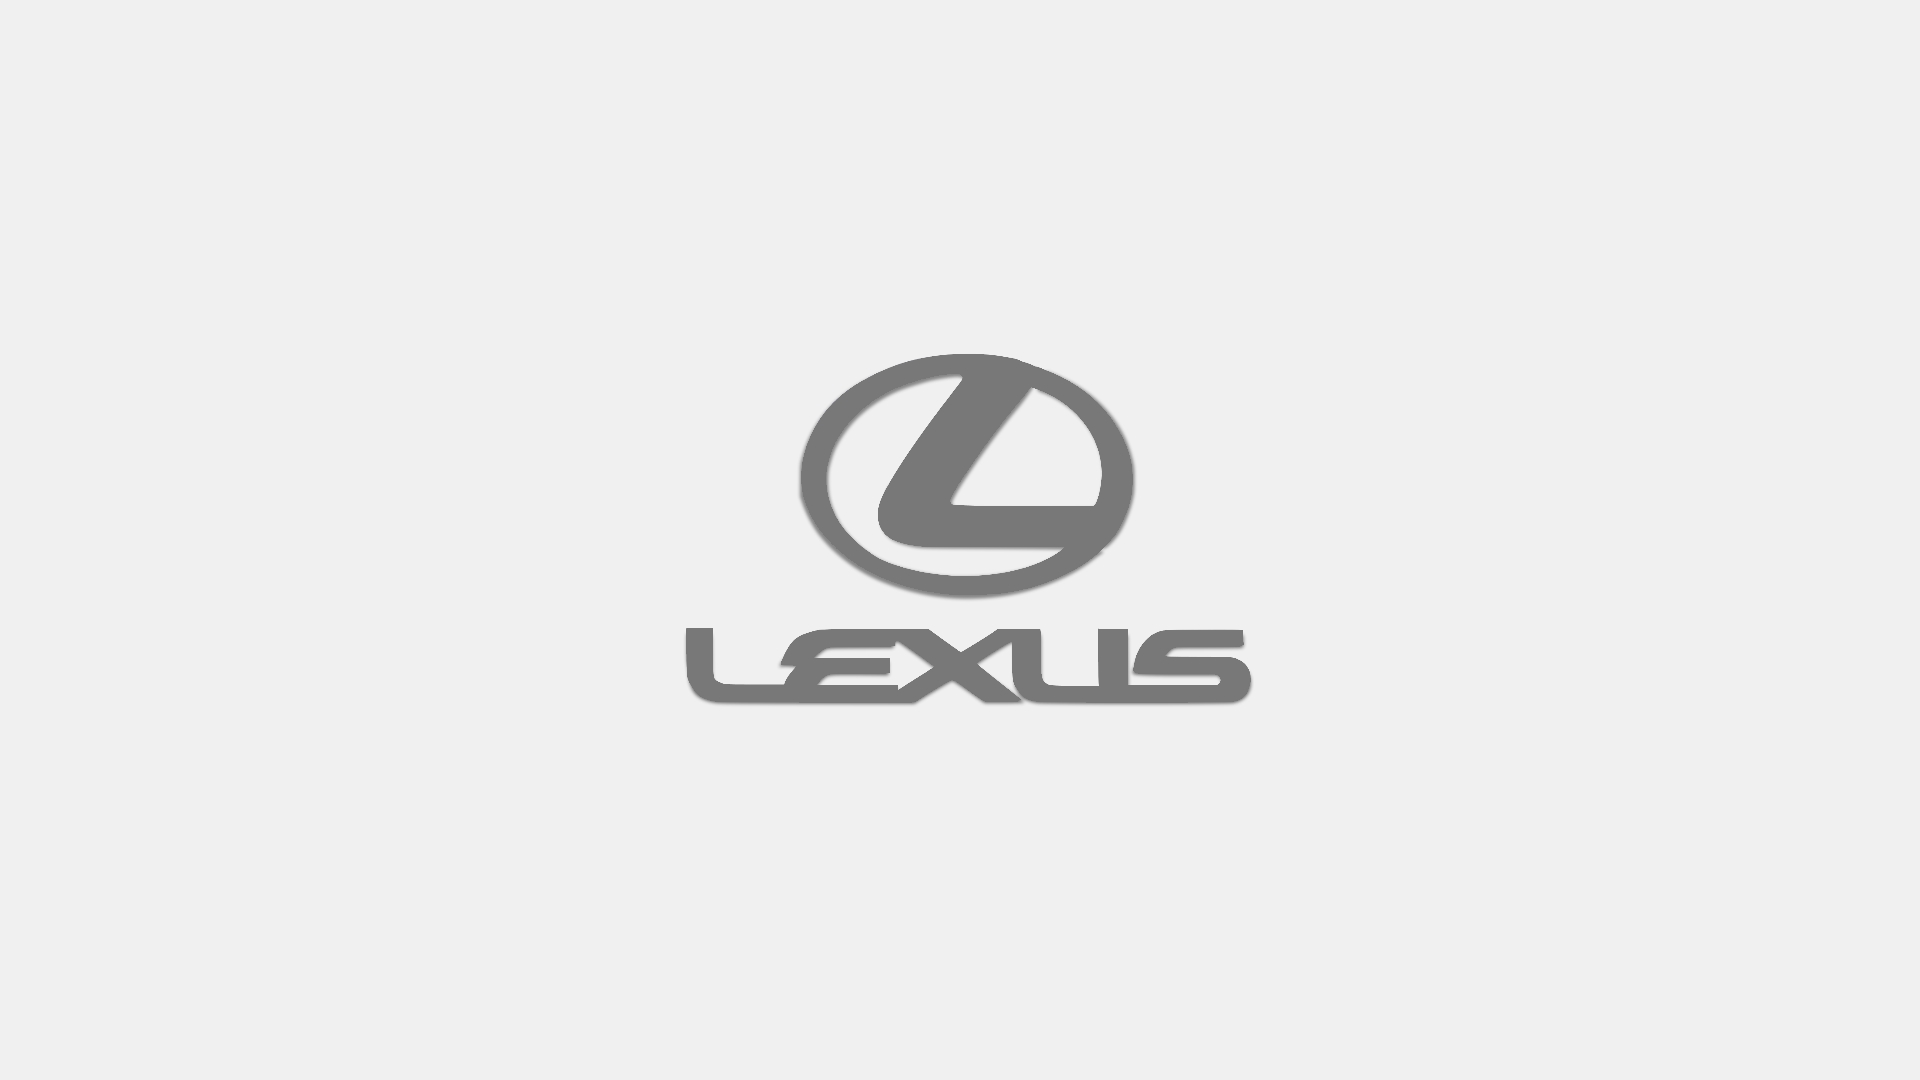 Lexus Logo Wallpaper Jpg